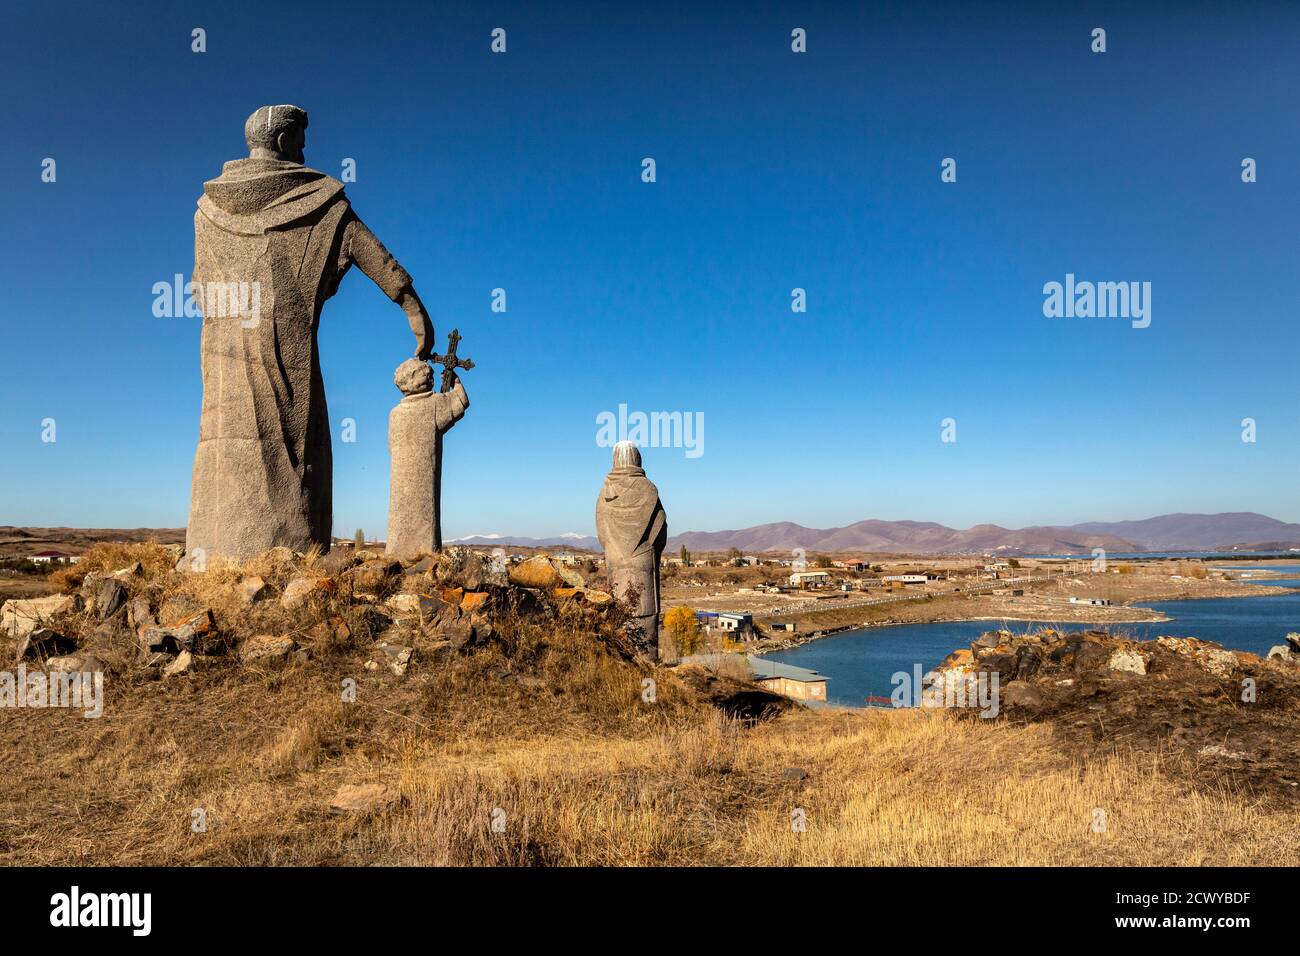 Sculptures along the road at Sevan Lake Armenia on the way from Yerevan to Nagorno-Karabakh. Stock Photo